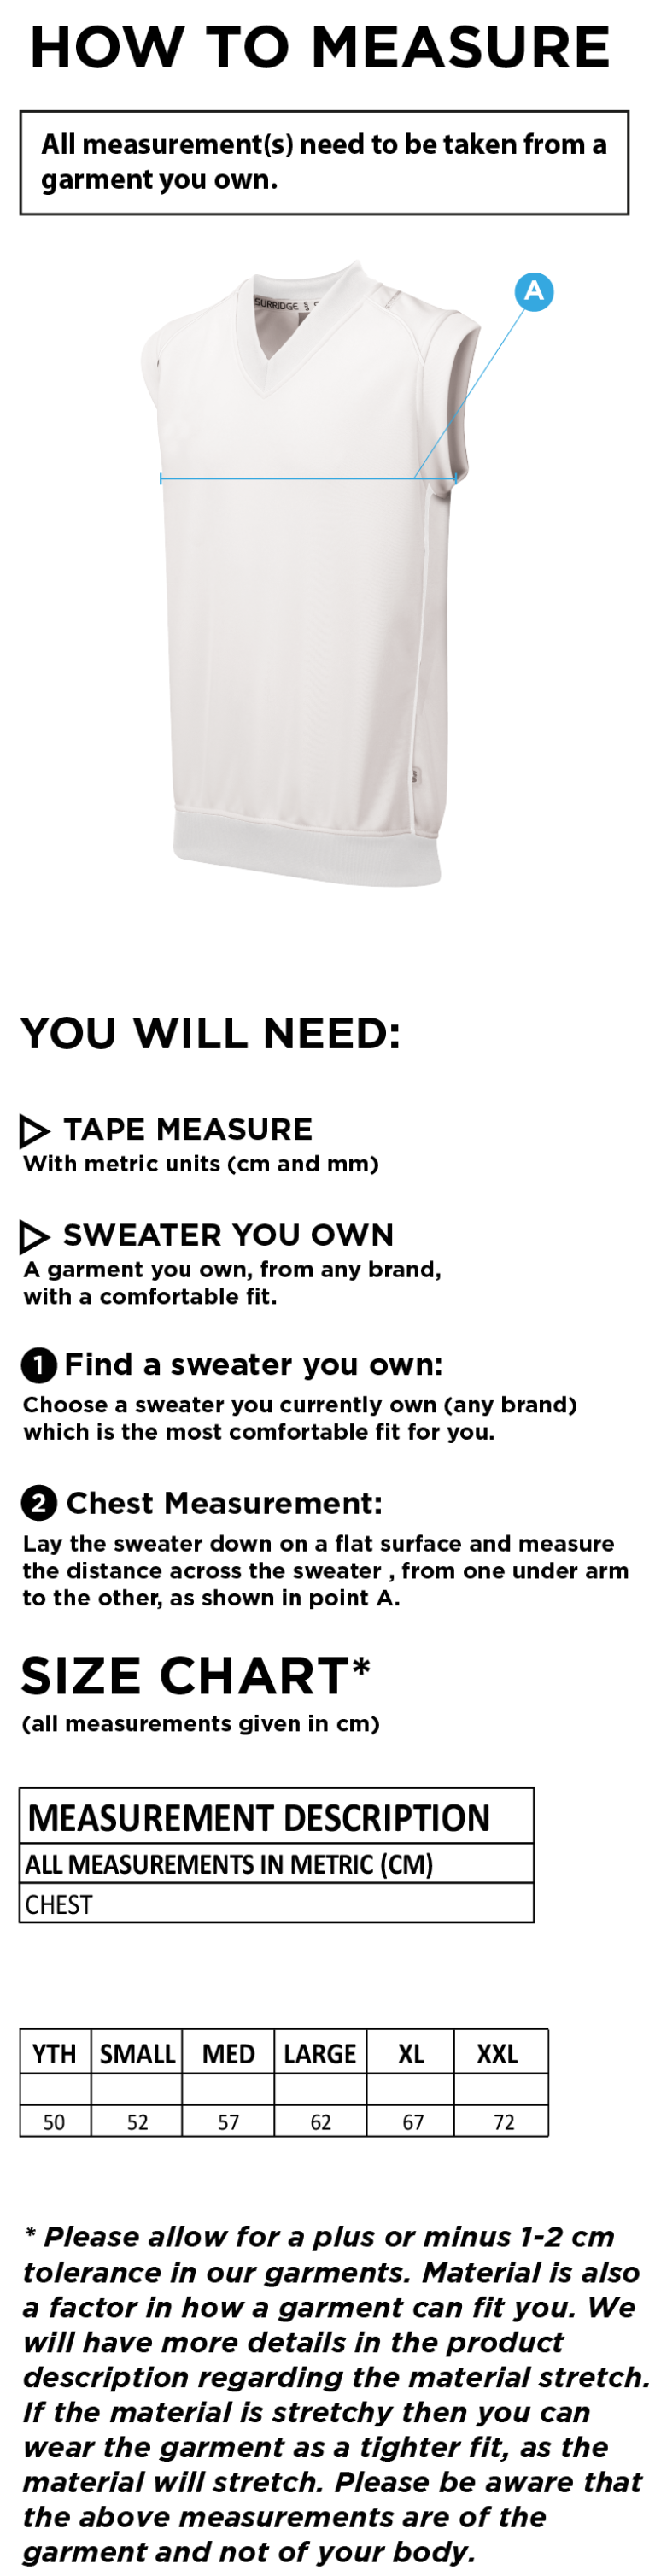 Farncombe CC - Curve Sleeveless Sweater - Size Guide